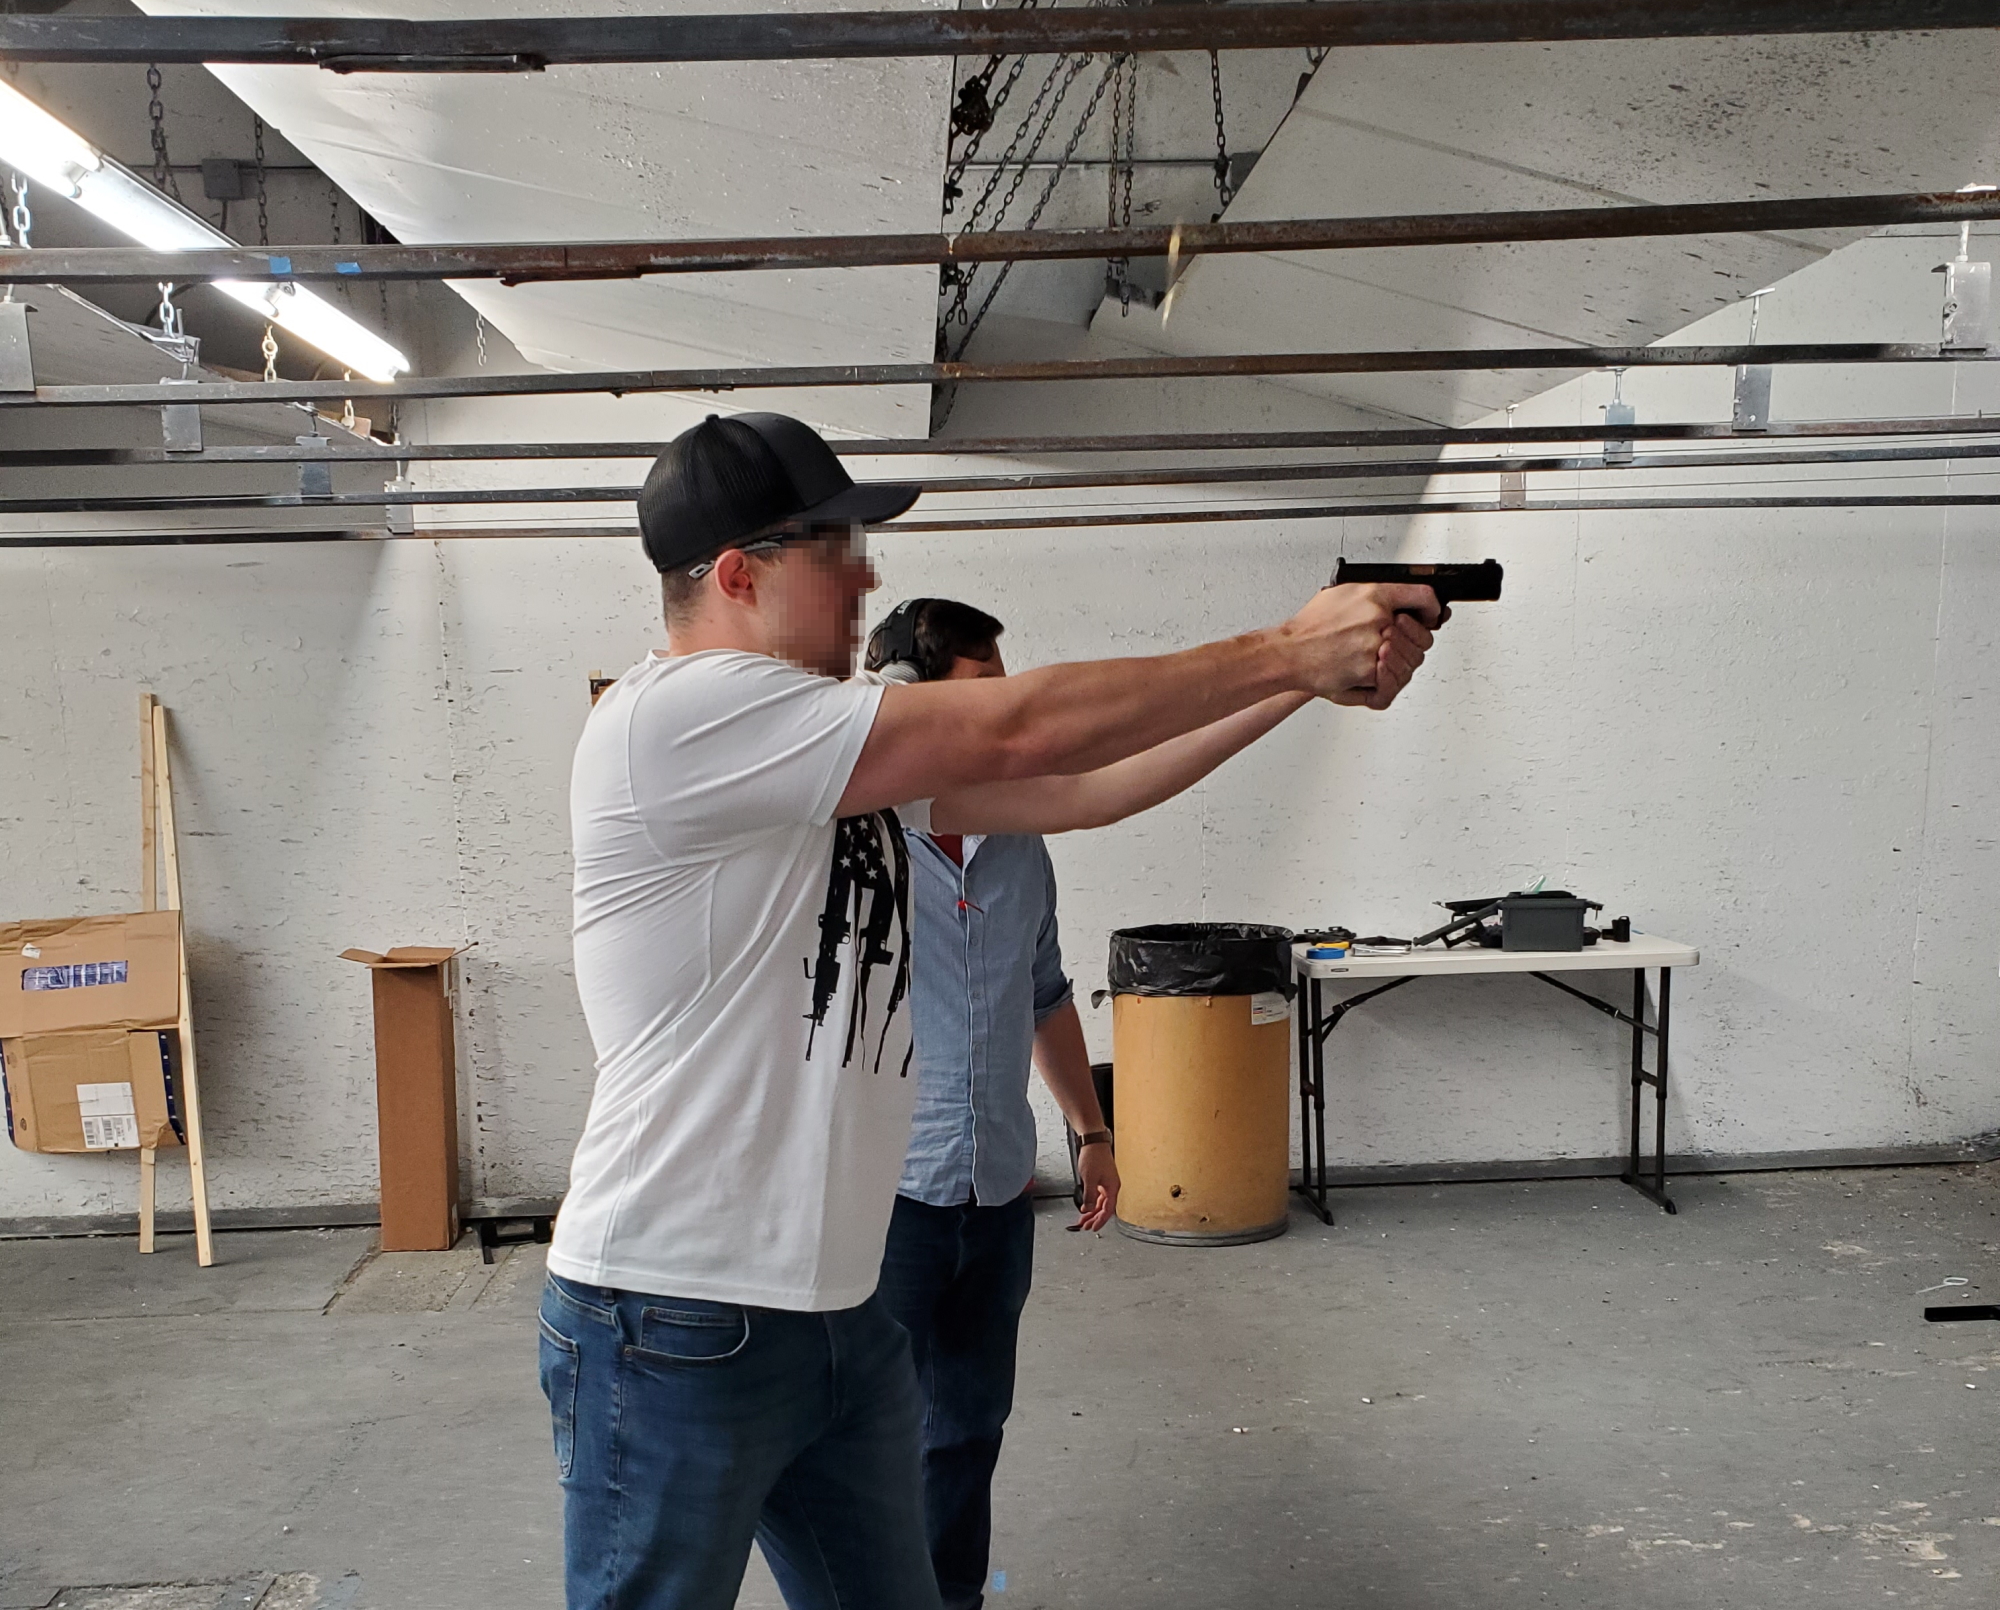 man firing a pistol in training